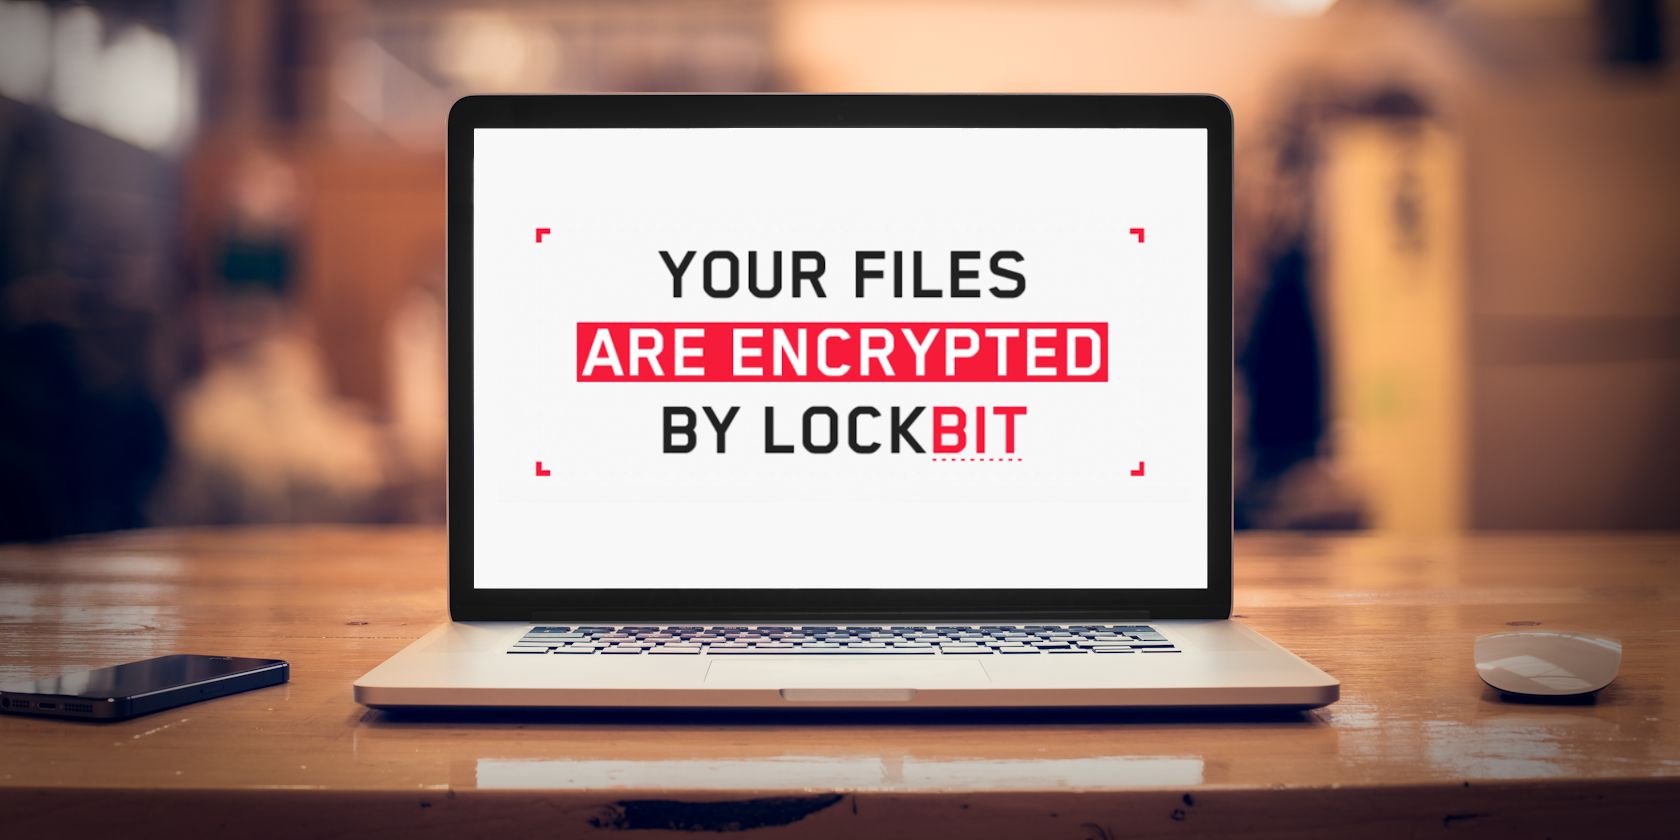 lockbit ransom message on laptop screen